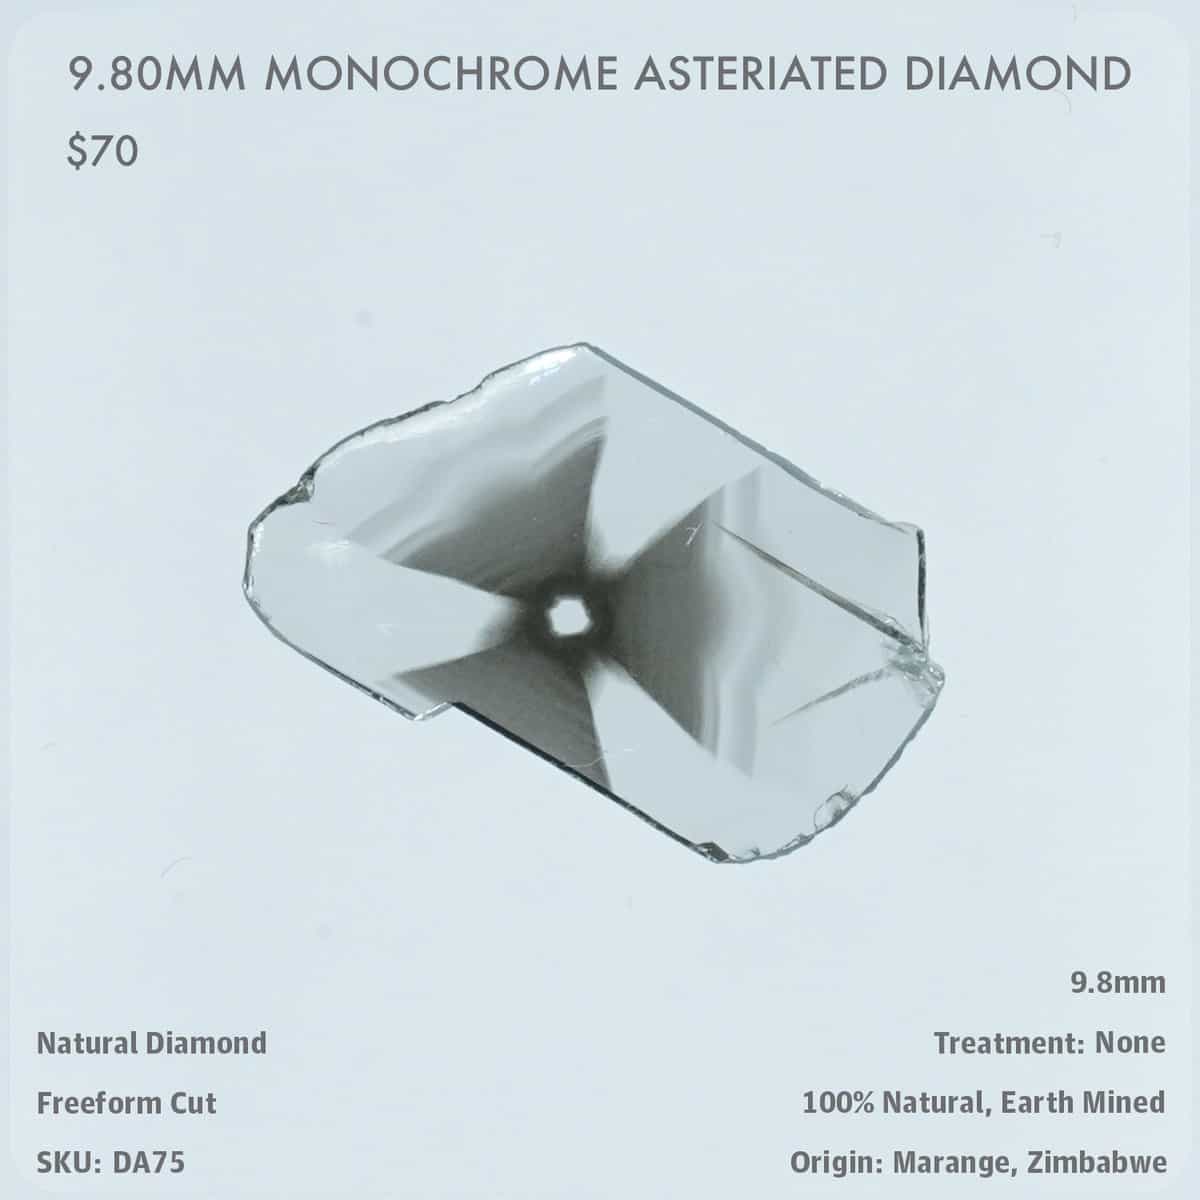 9.80mm Monochrome Asteriated Diamond